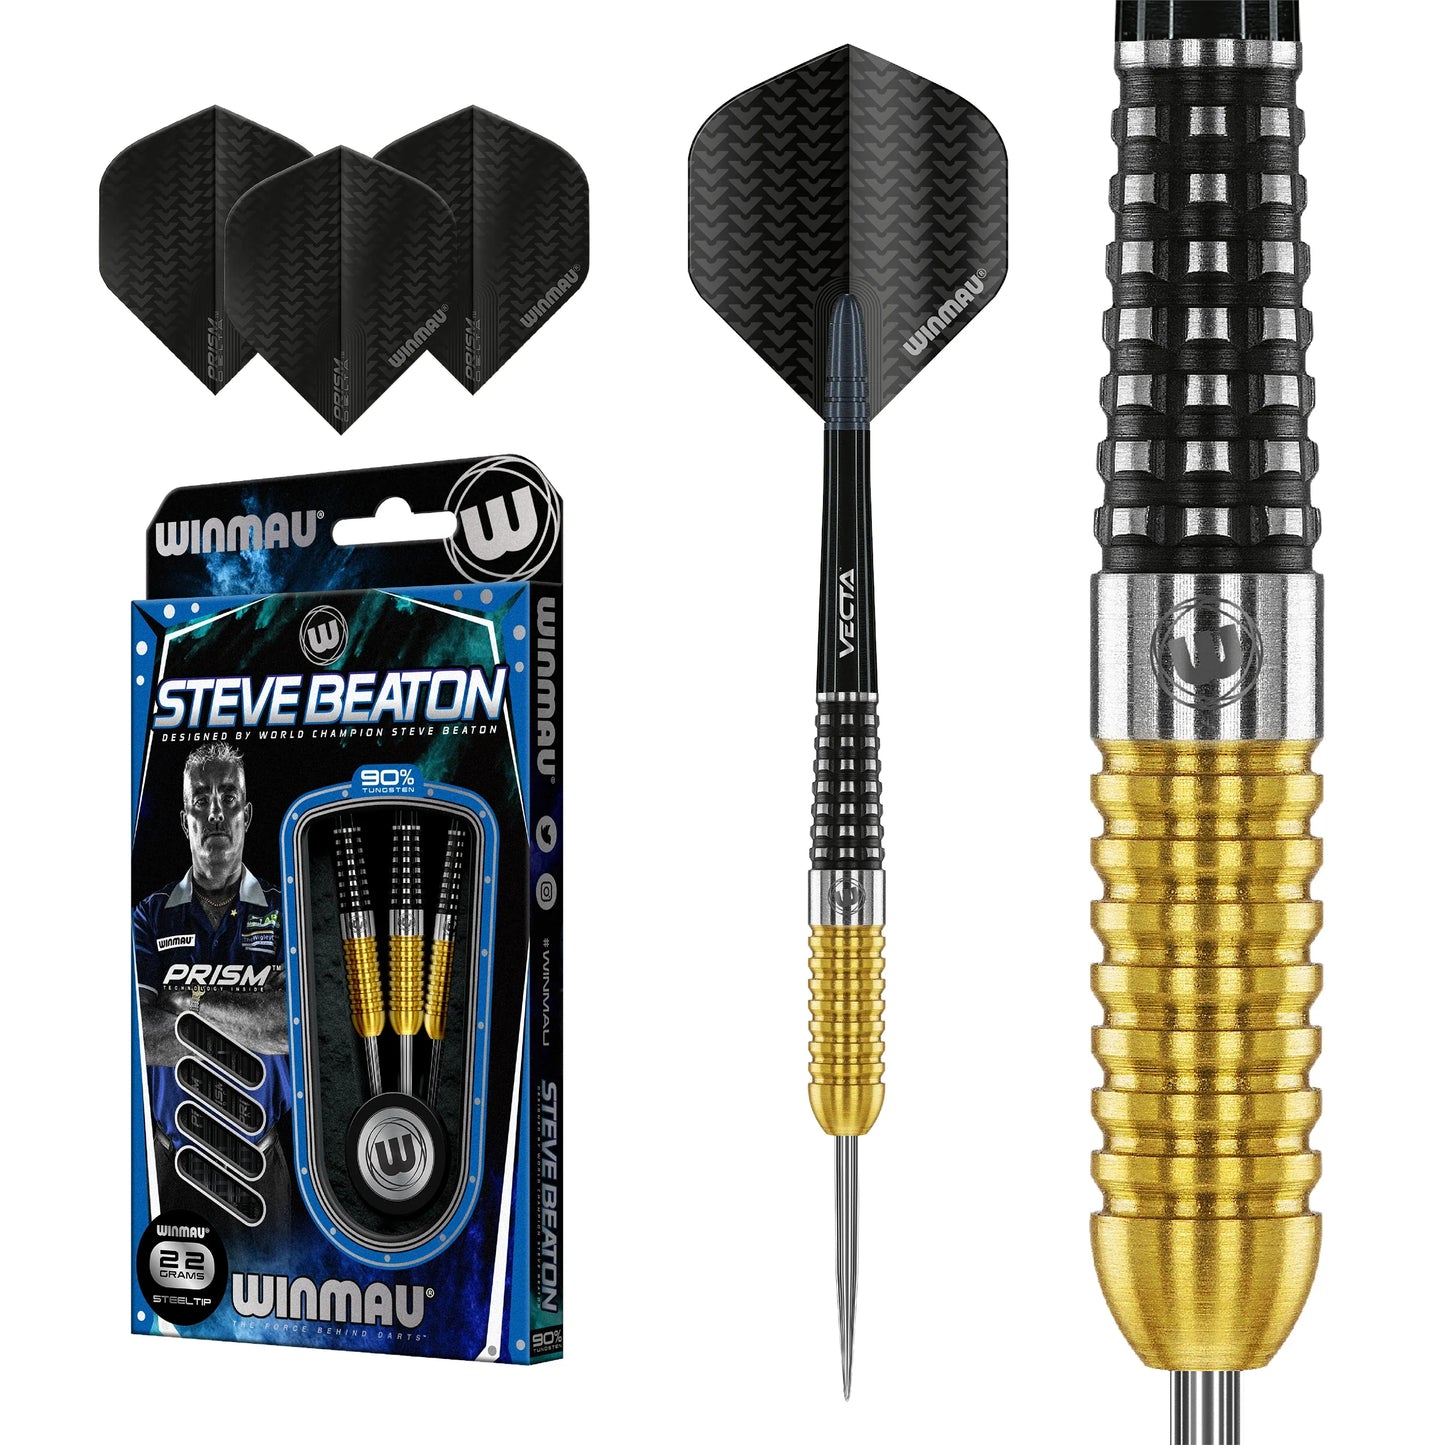 Winmau Steve Beaton 22g Special Edition Darts